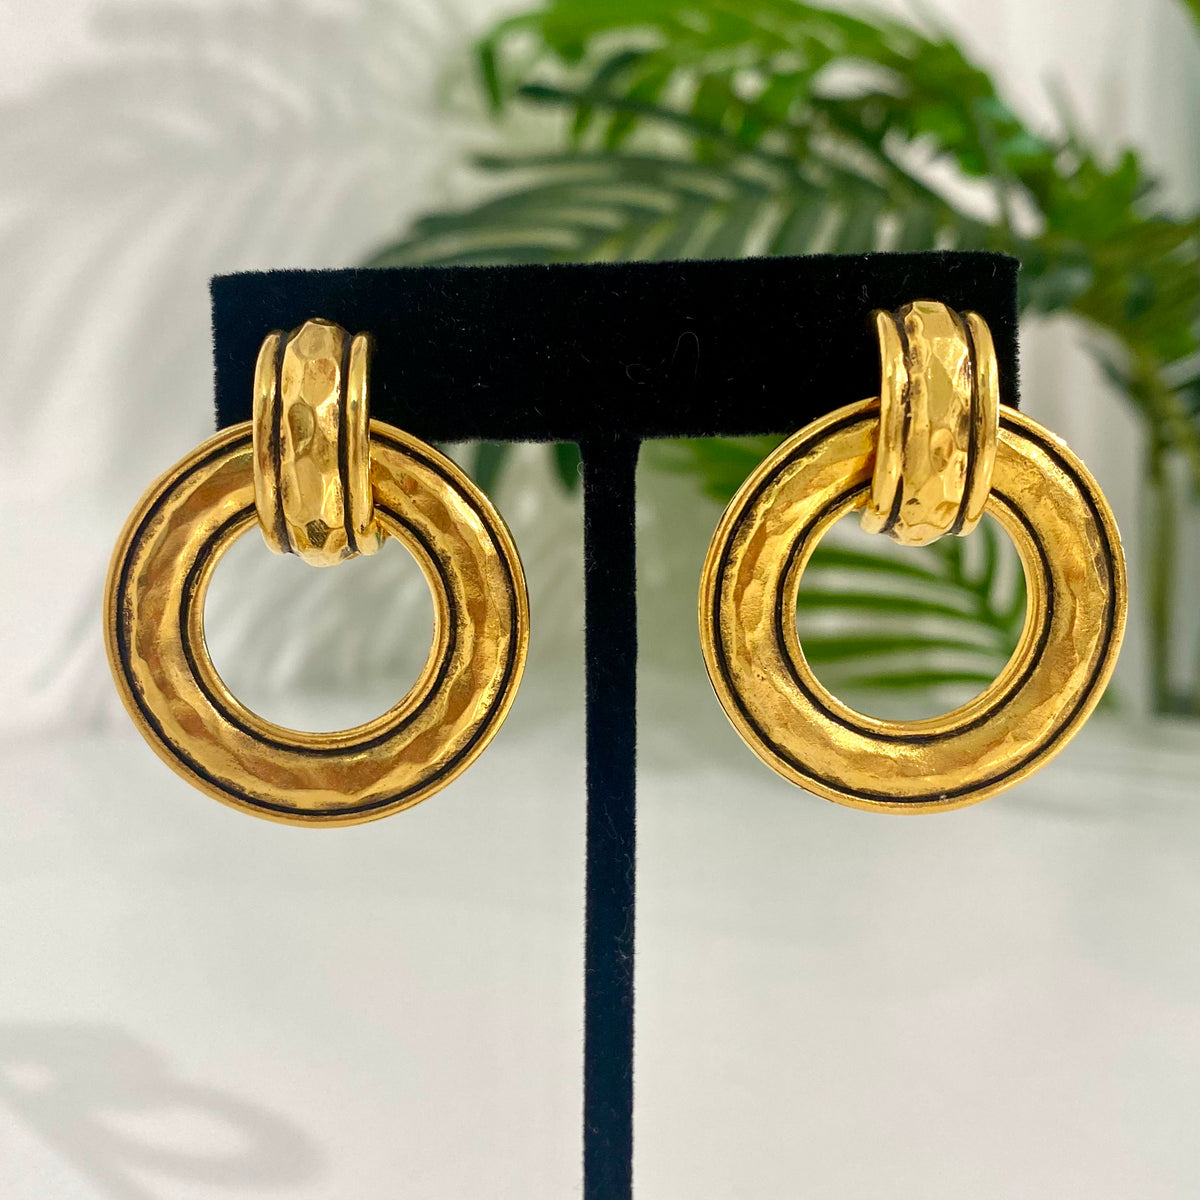 Vintage chanel earrings gold - Gem